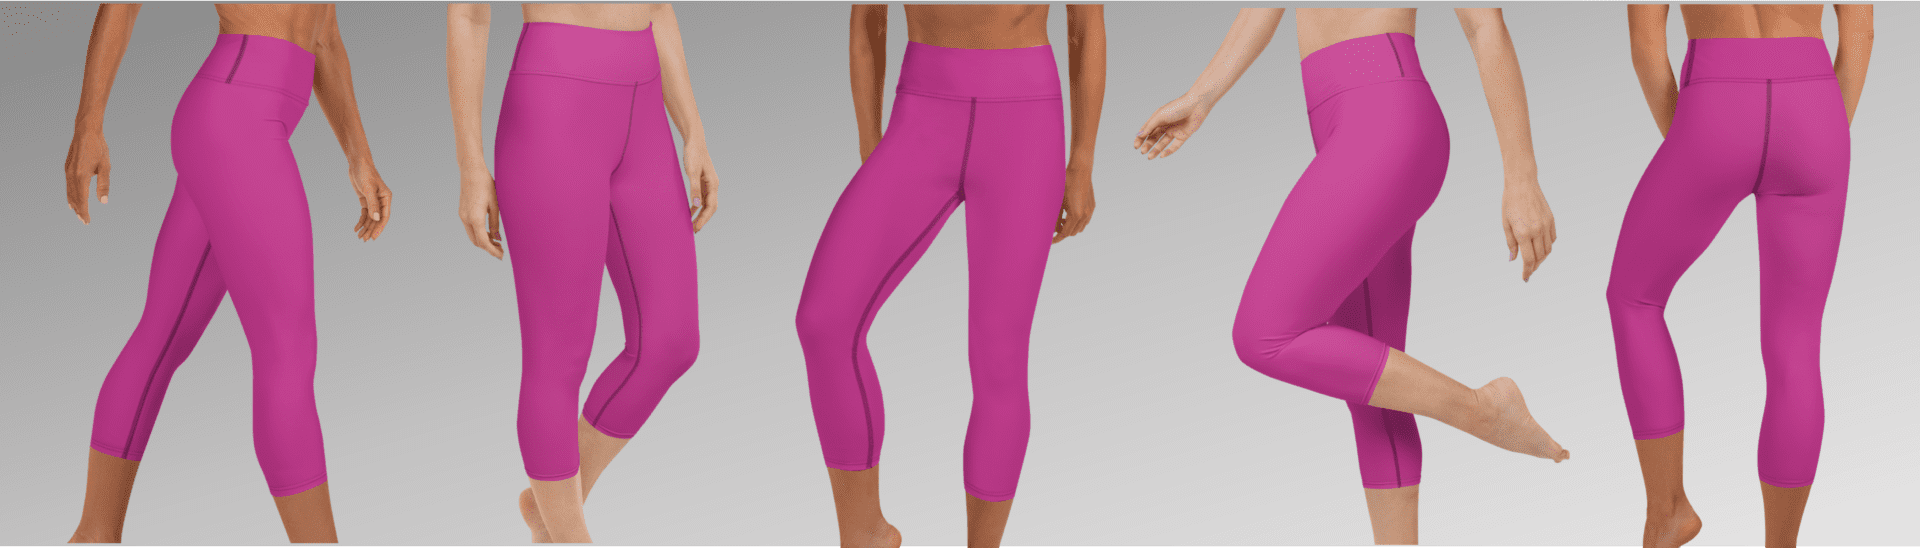 Pink yoga pants with a high waist.